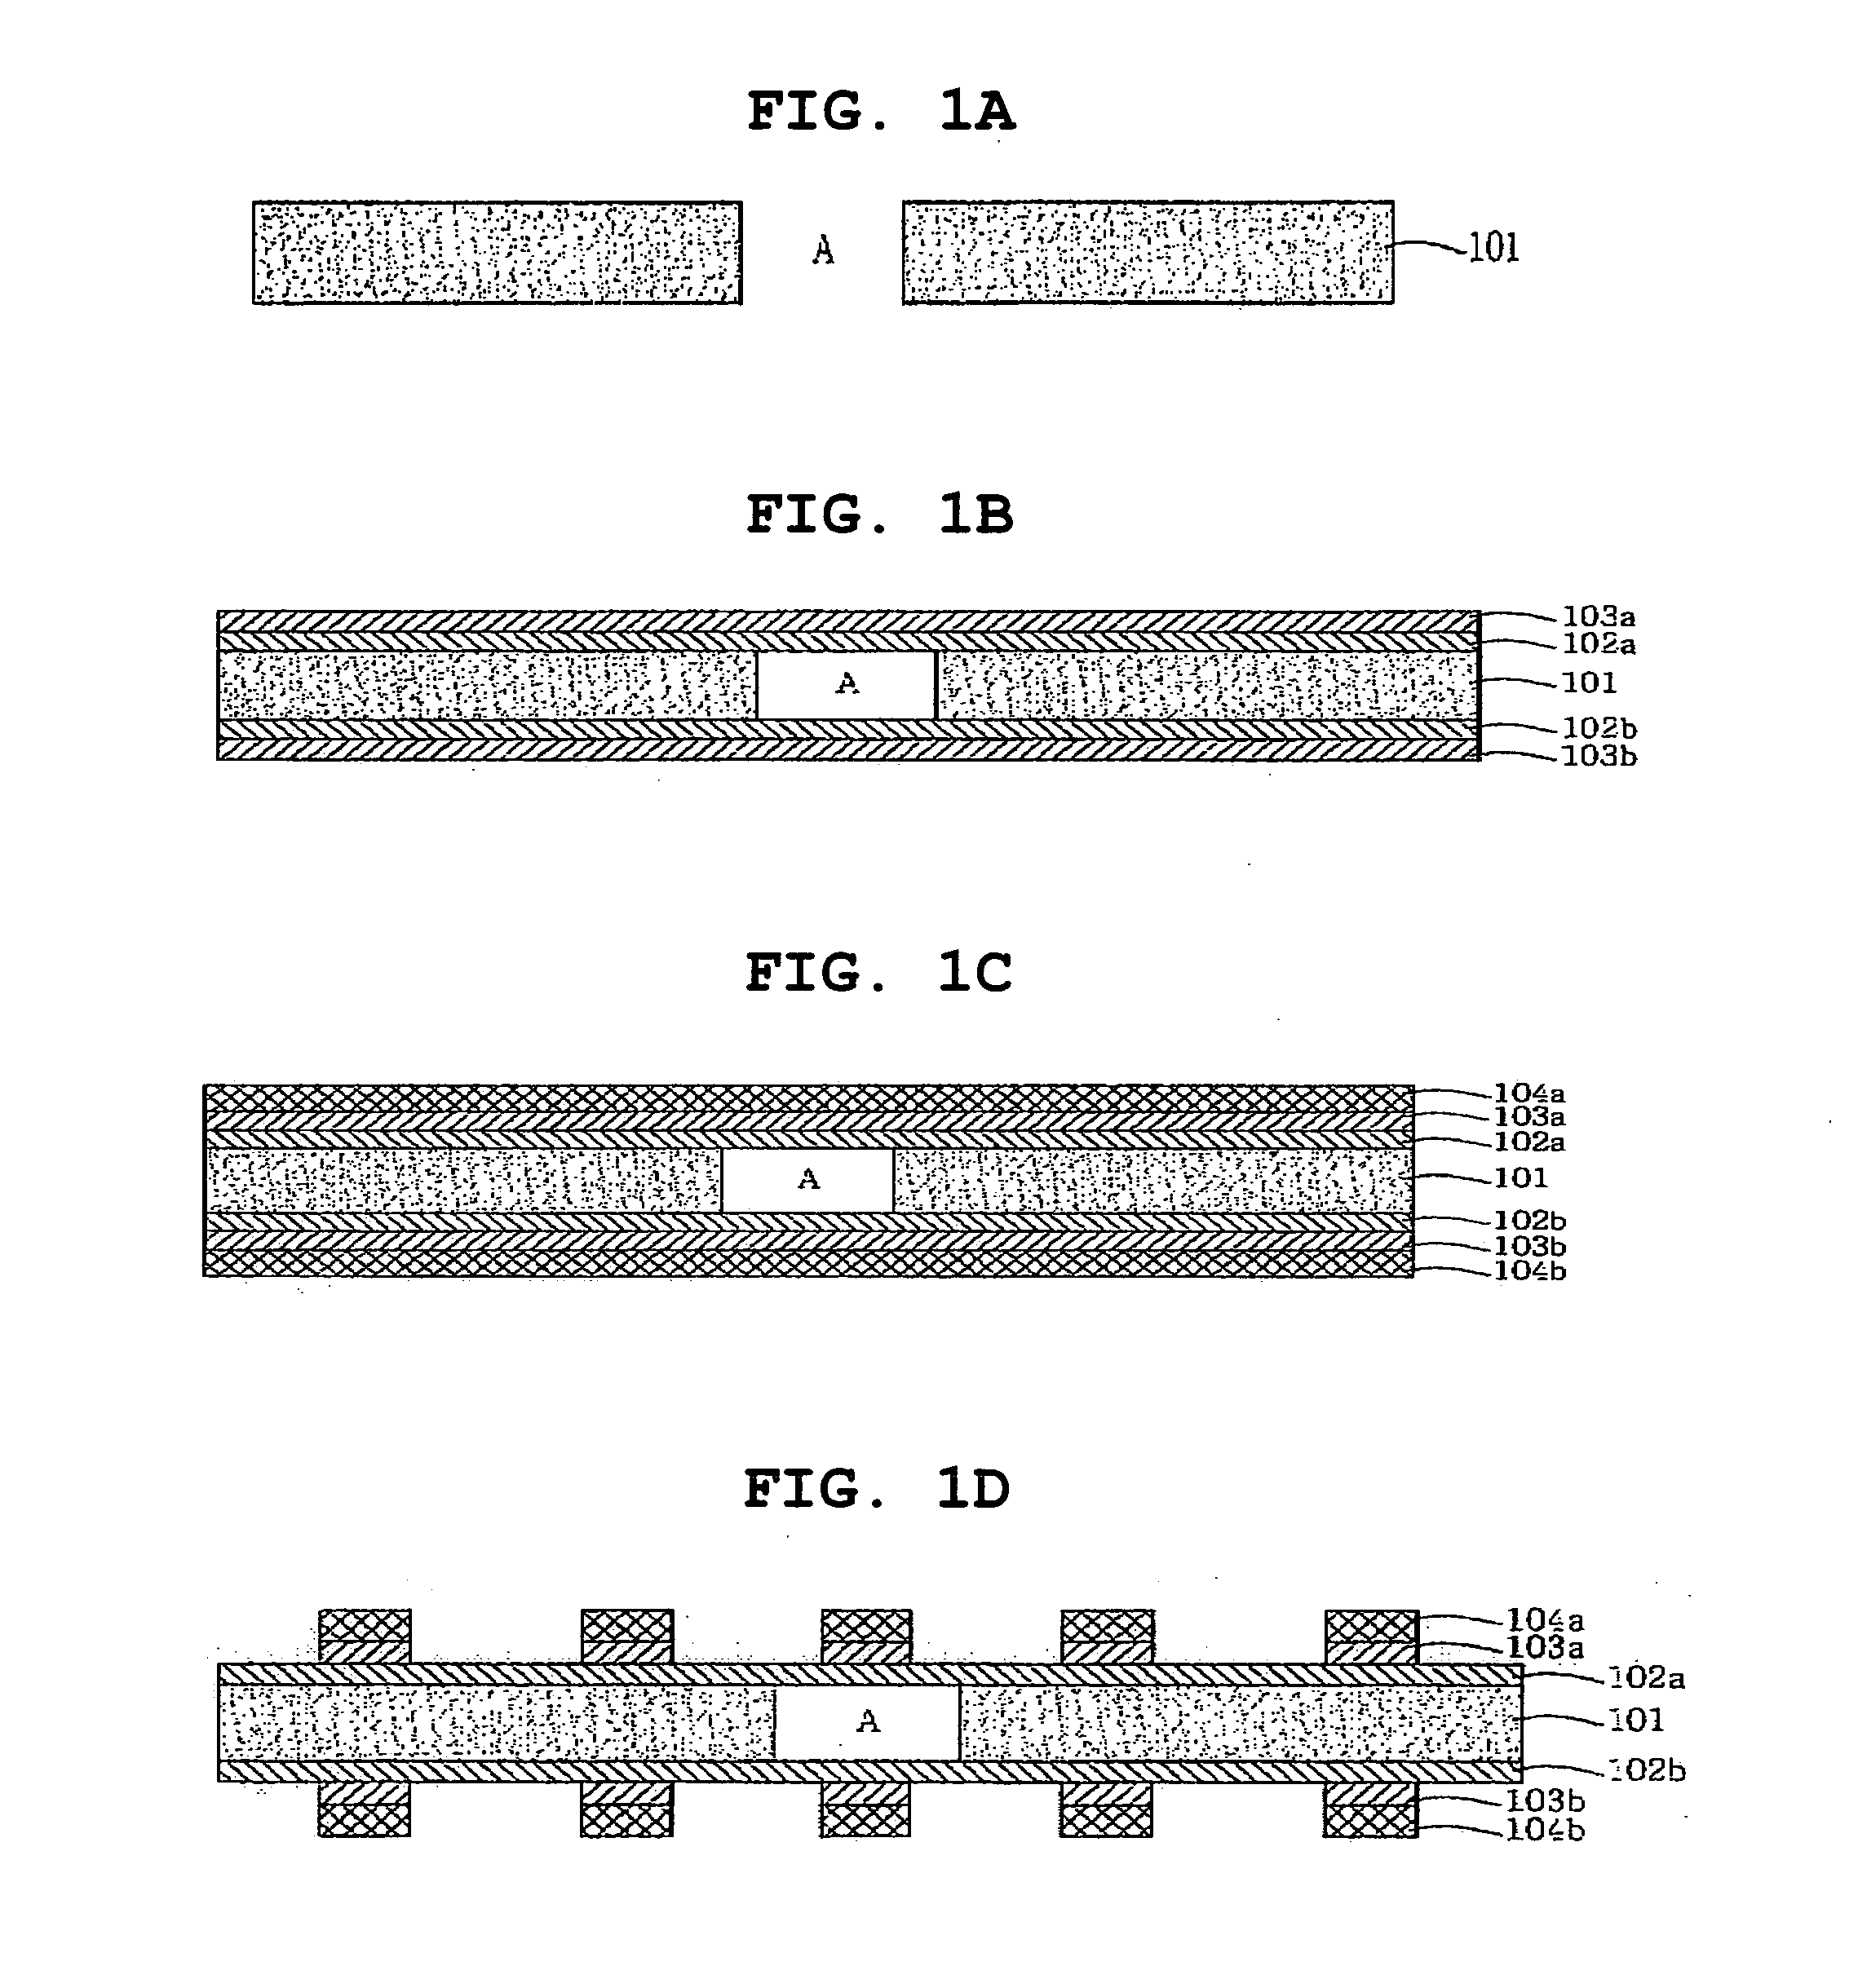 Rigid flexible printed circuit board and method of fabricating same